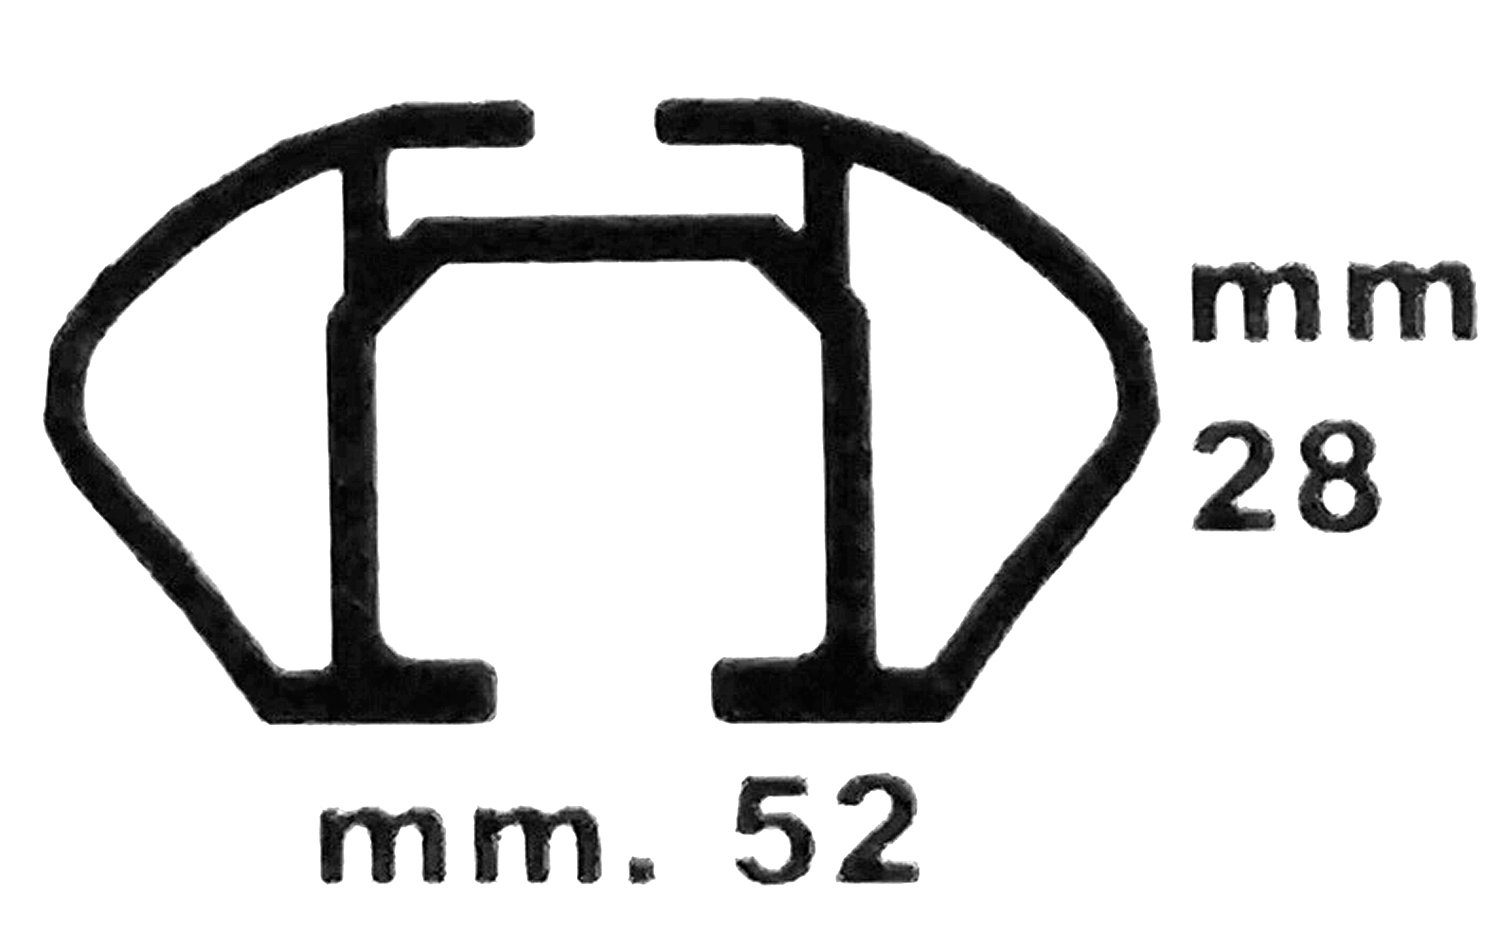 VDP Dachbox, (Für Opel / Dachträger/Relingträger Opel mit carbonlook Sport Dachbox Tourer 4-11 Astra im Tourer VDPBA320 + Ihren (5 Vauxhall Vauxhall abschließbar Dachträger / KING1 Astra Sport (H) Set), 4-11, Türer) Türer) VDP (5 (H) 320Ltr und kompatibel Dachbox